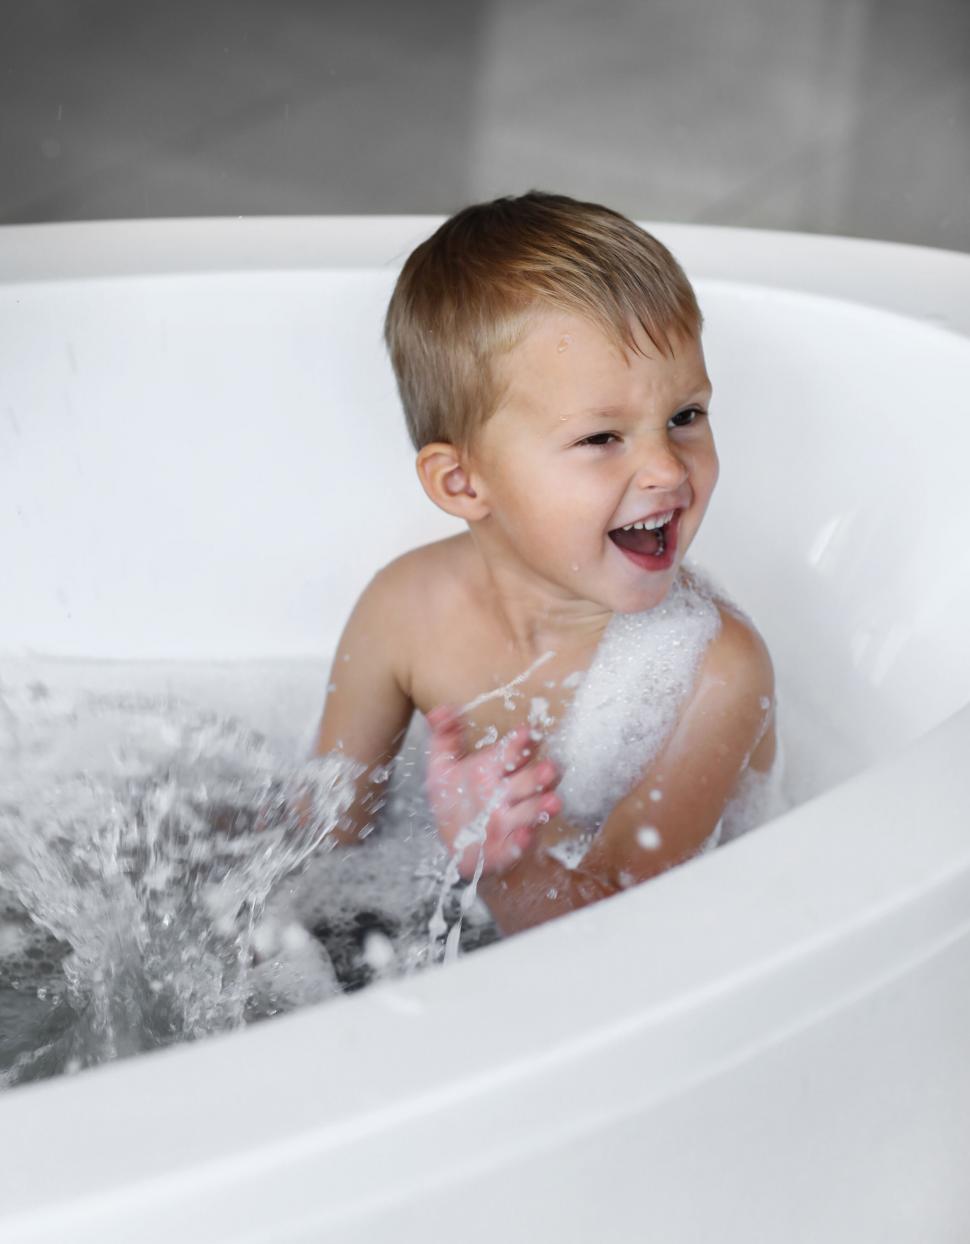 Free Image of Little boy splashing water in the bathtub 